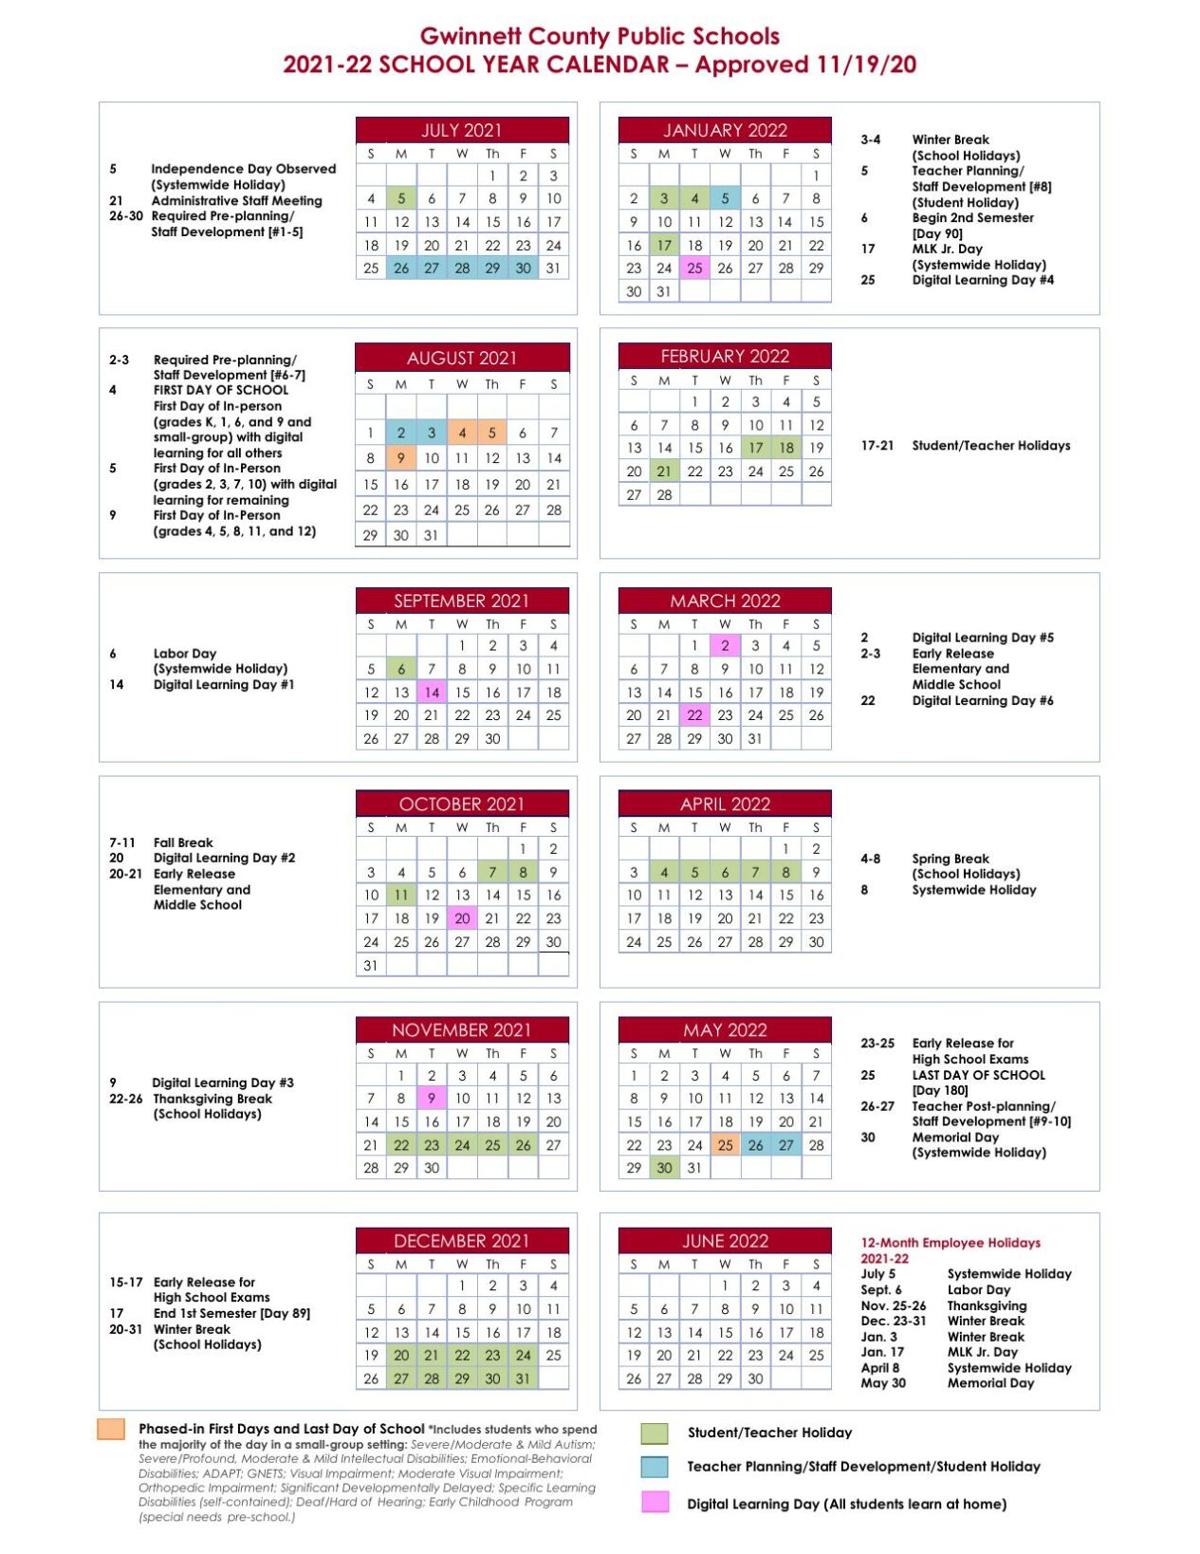 Nyc Board Of Ed Calendar 2022 23 Gwinnett County Public Schools' 2021-2022 School Year Calendar | |  Gwinnettdailypost.com